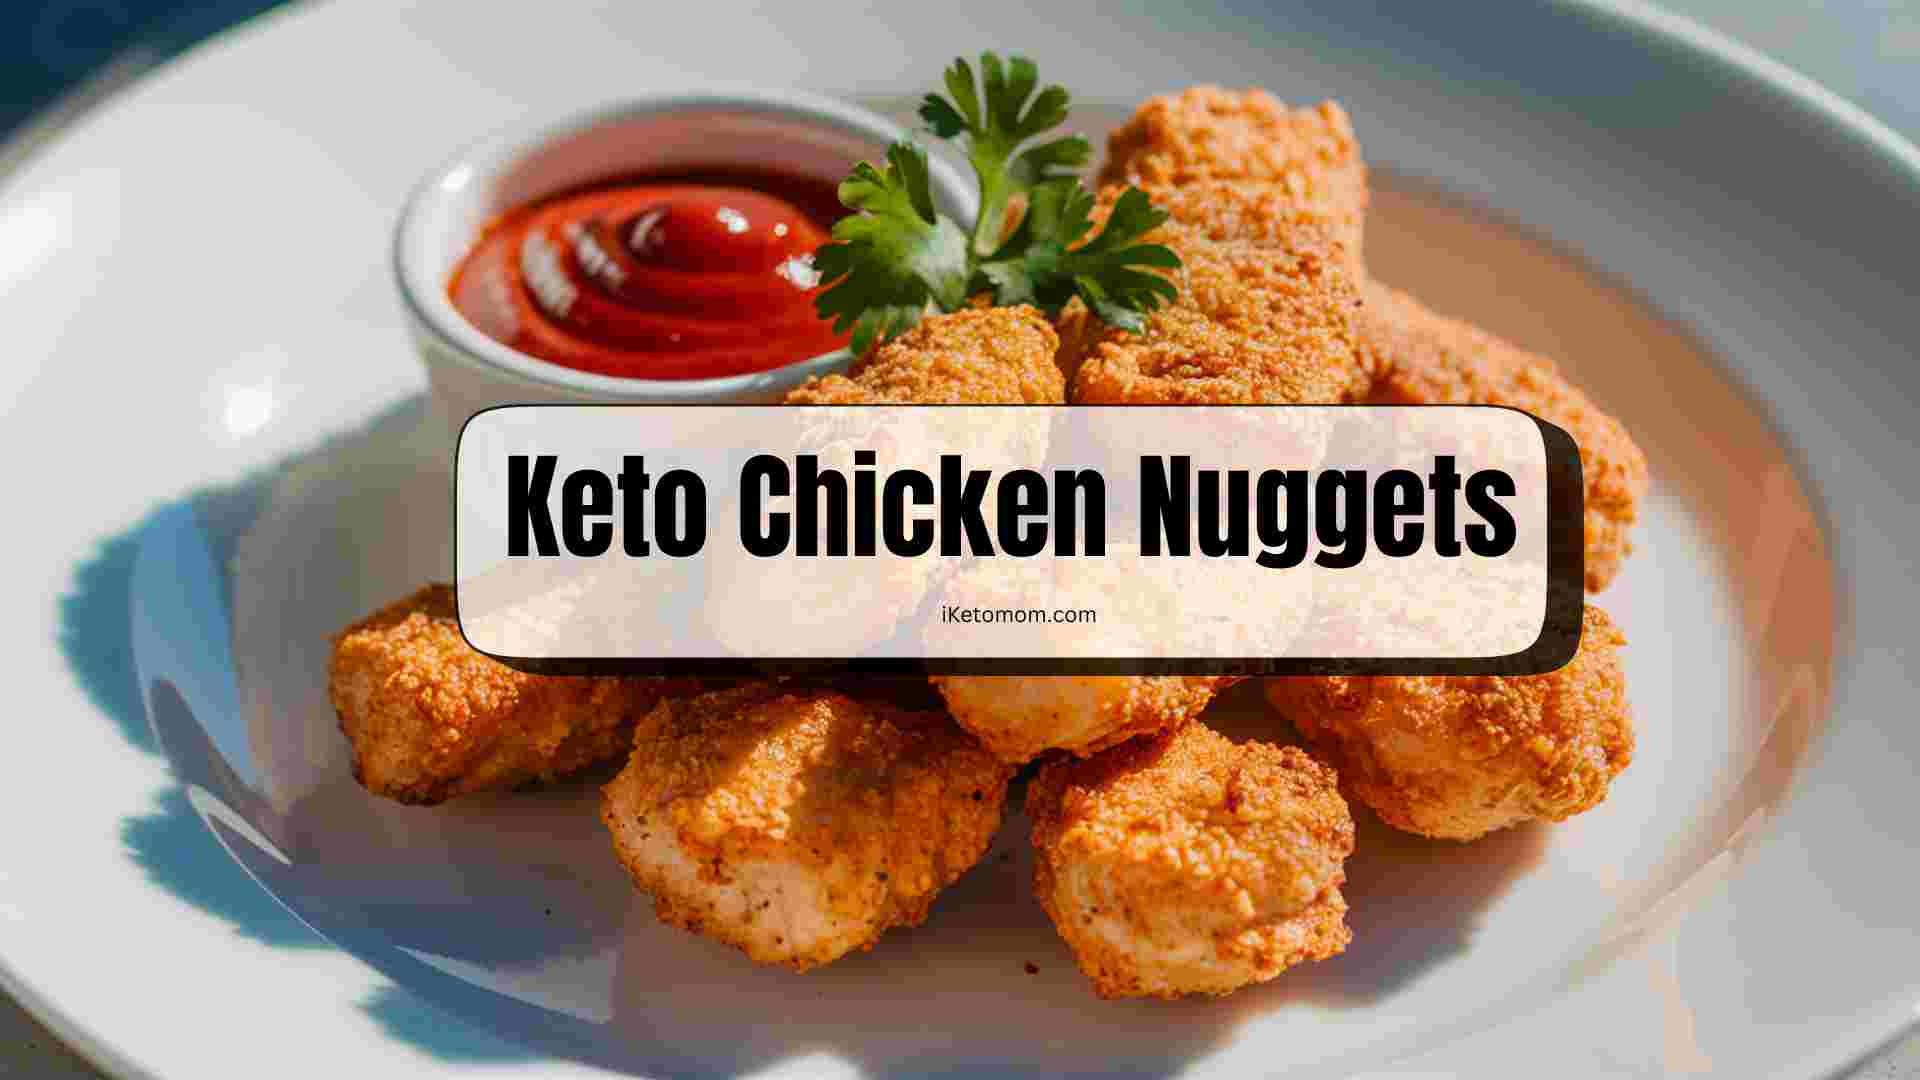 Keto Chicken Nuggets